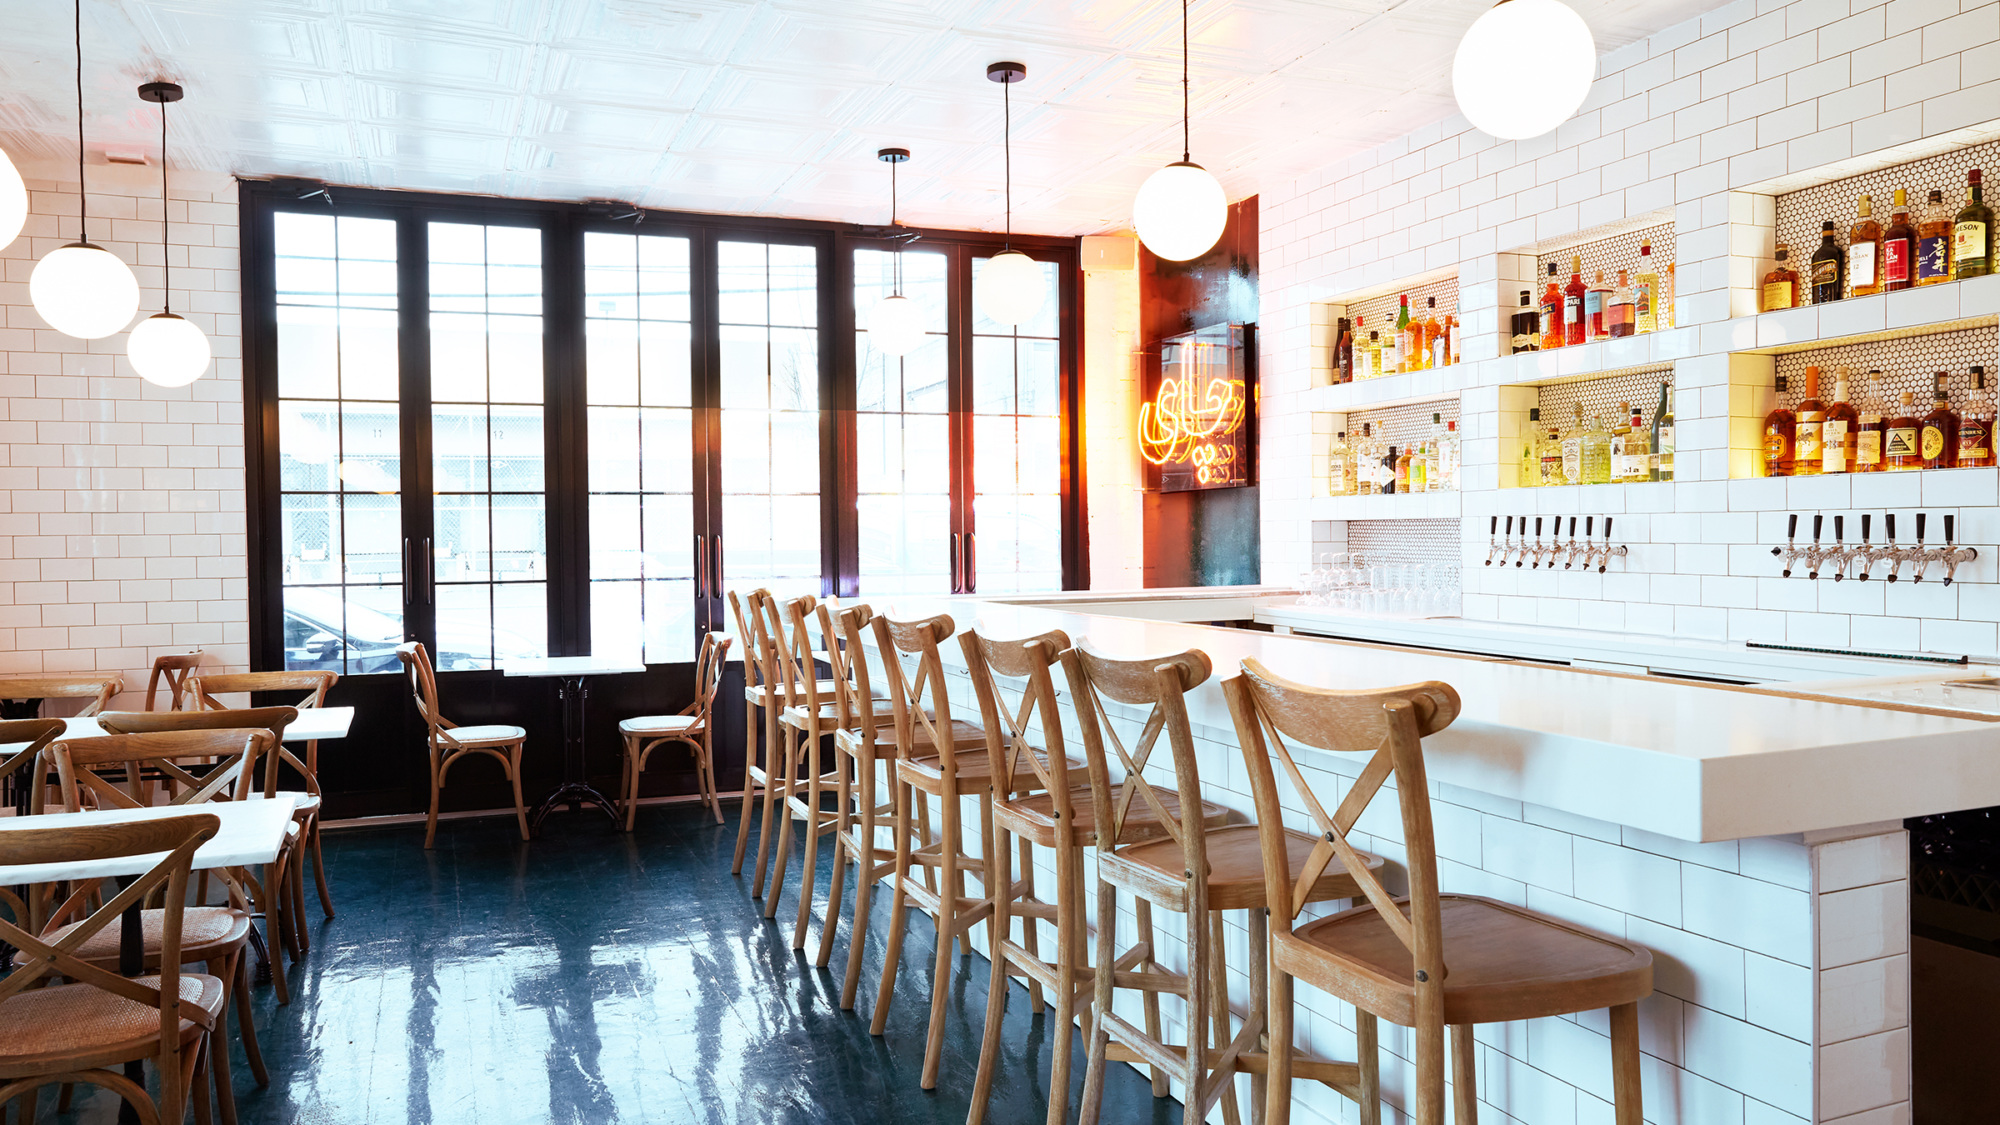 Rozhia Tabnak and Rodina Tabnak designed the restaurant space for Eyval.